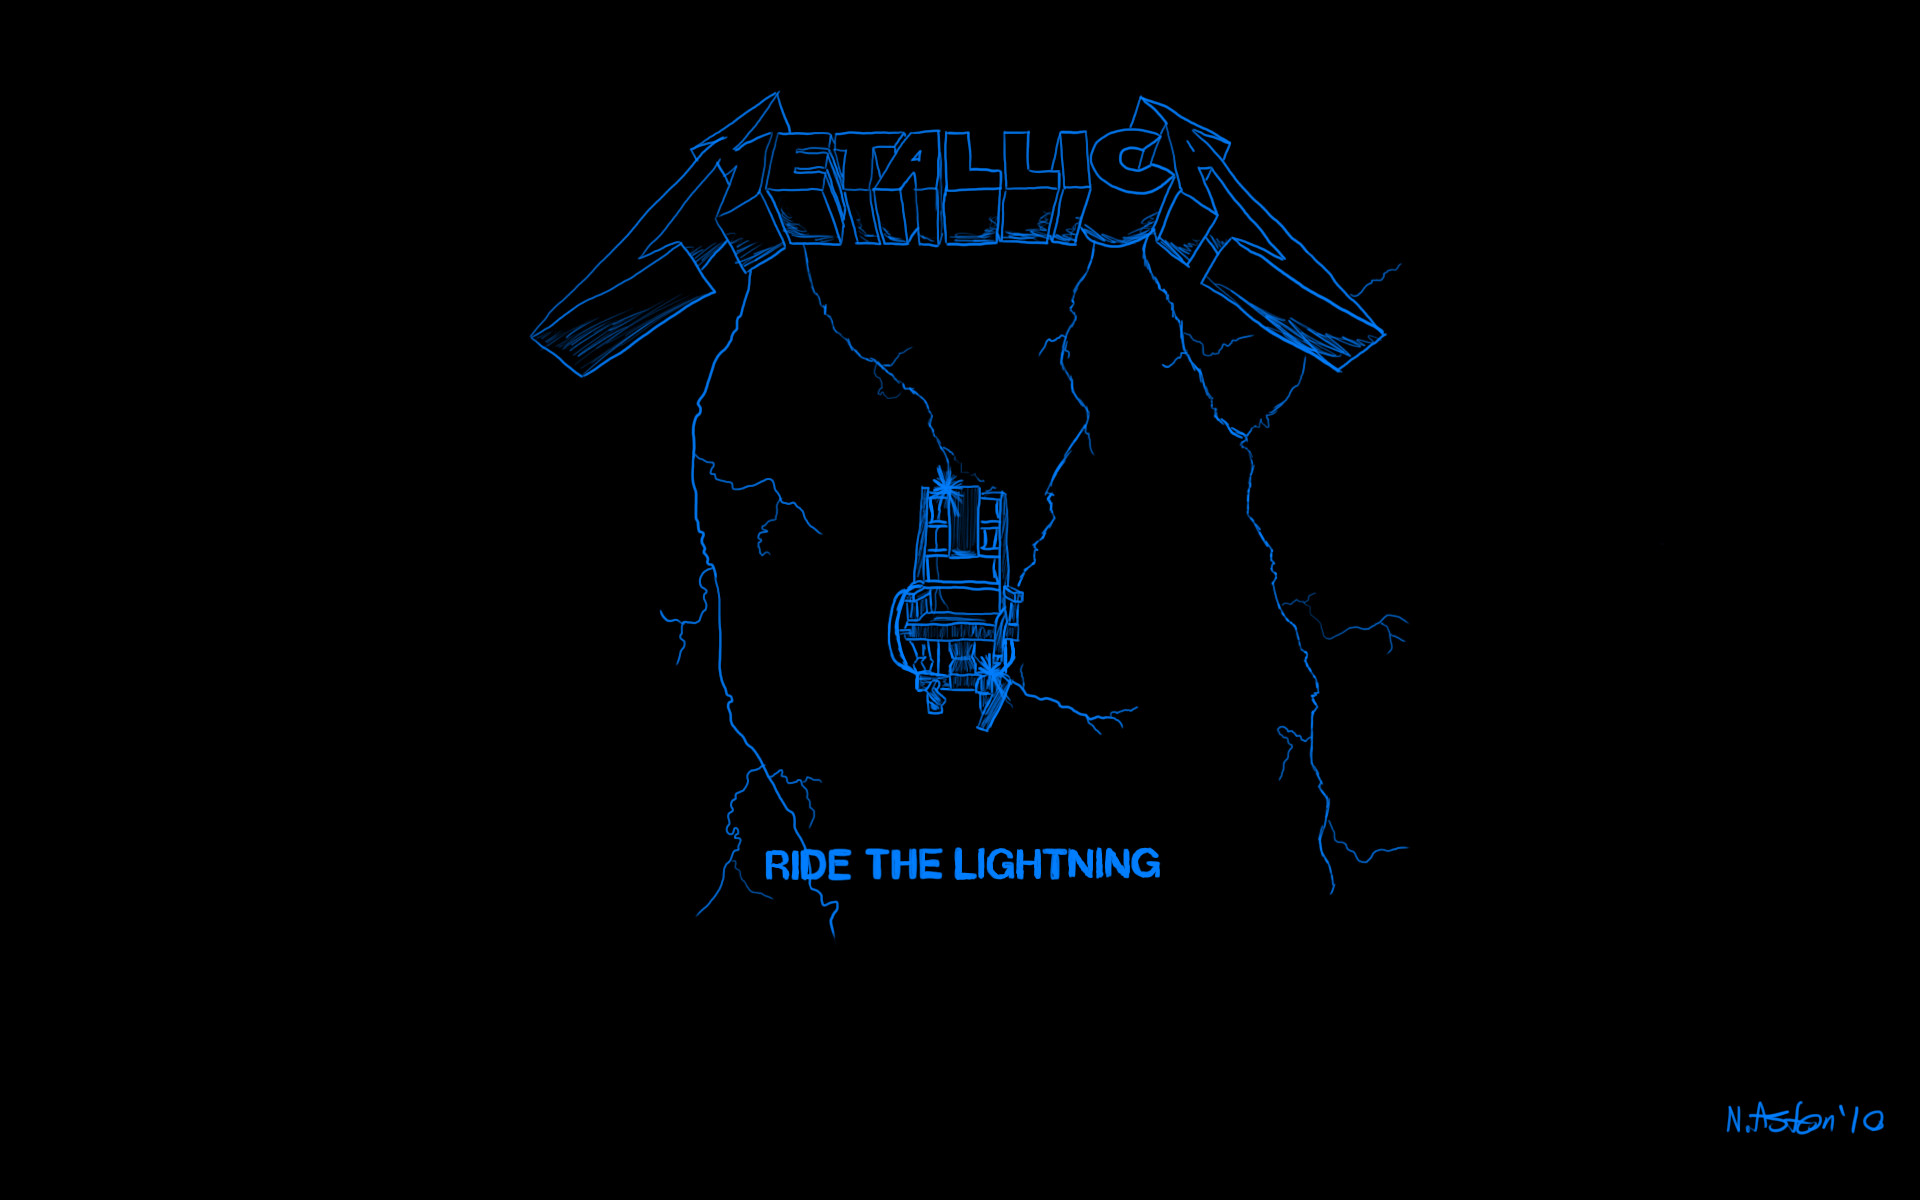 Download Metallica ride the lightning wallpapers 240 X 320